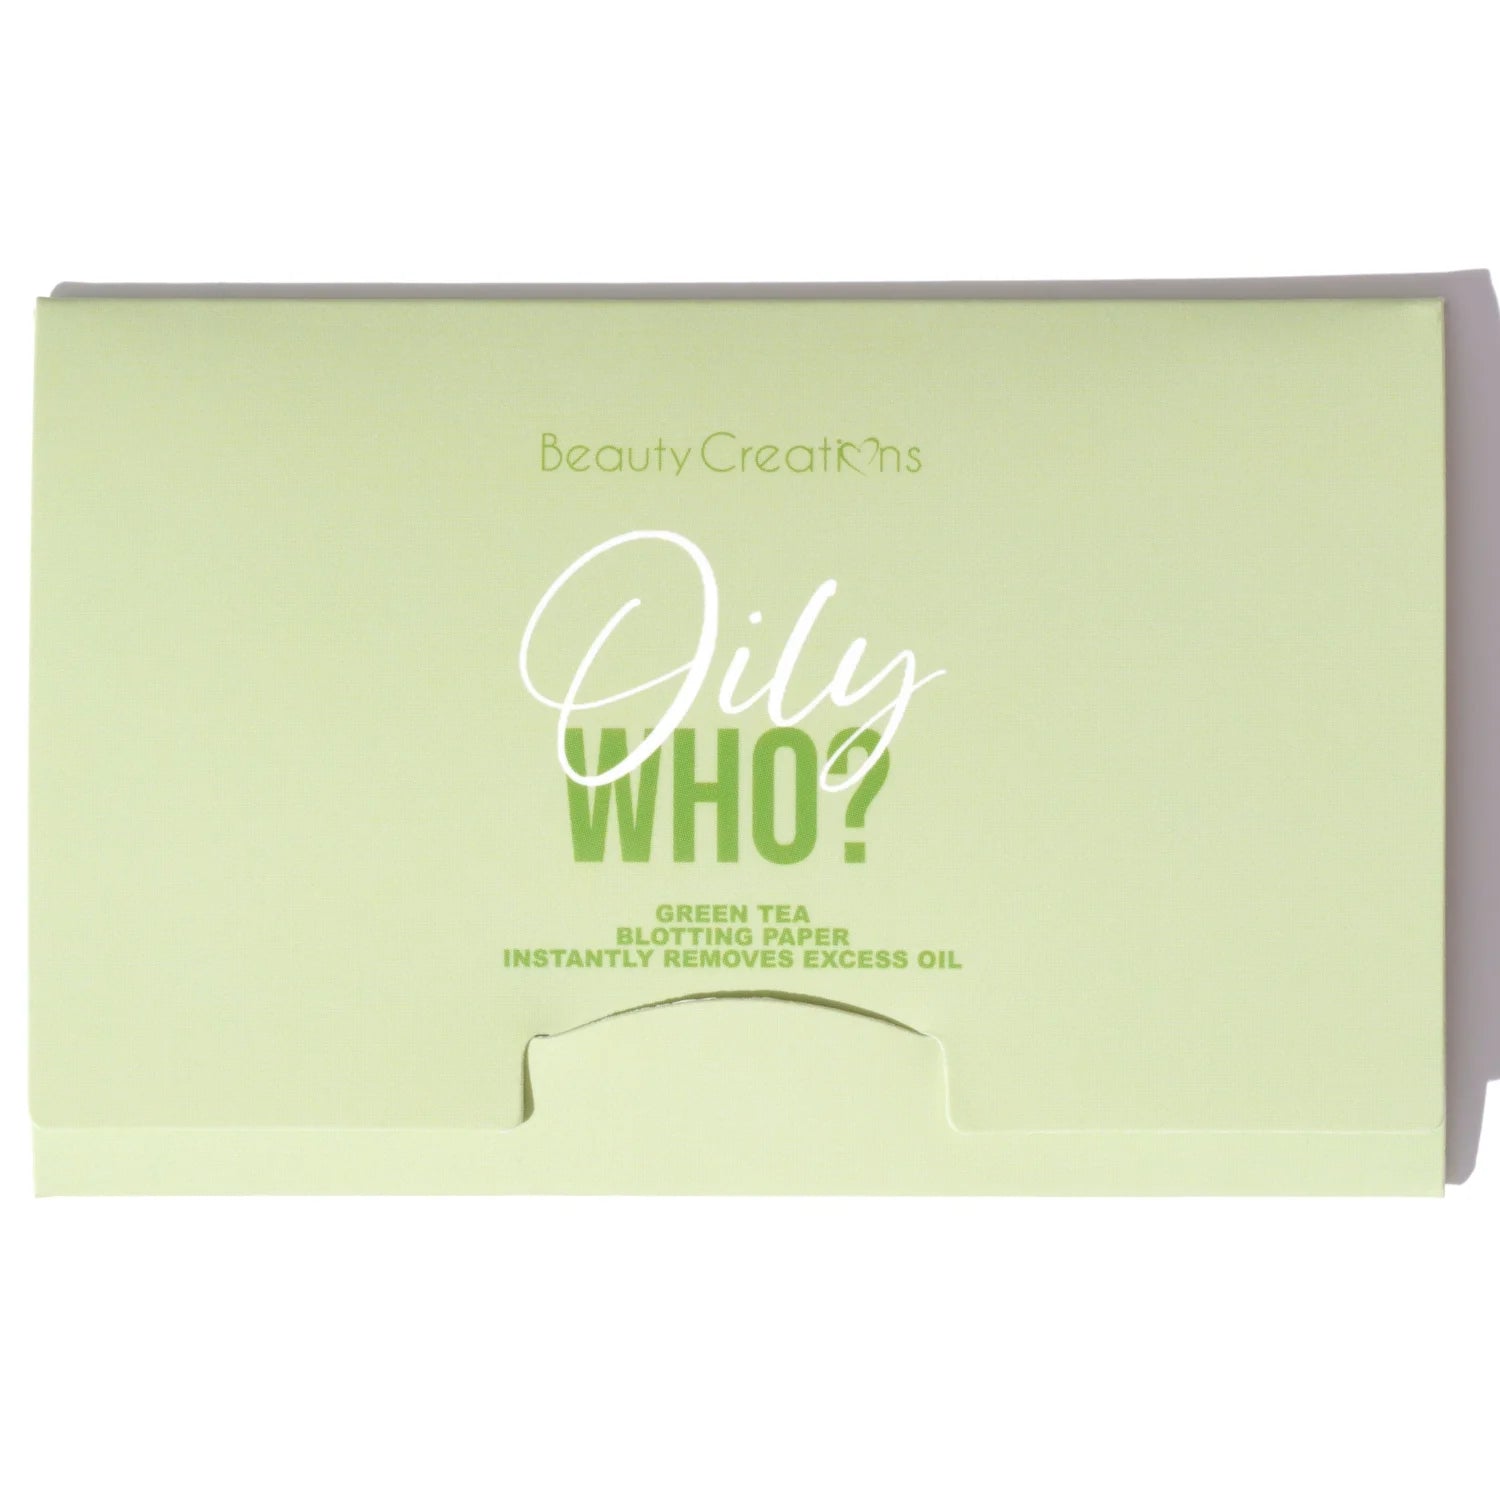 Beauty Creations - Oily Who? Green Tea Blotting Paper